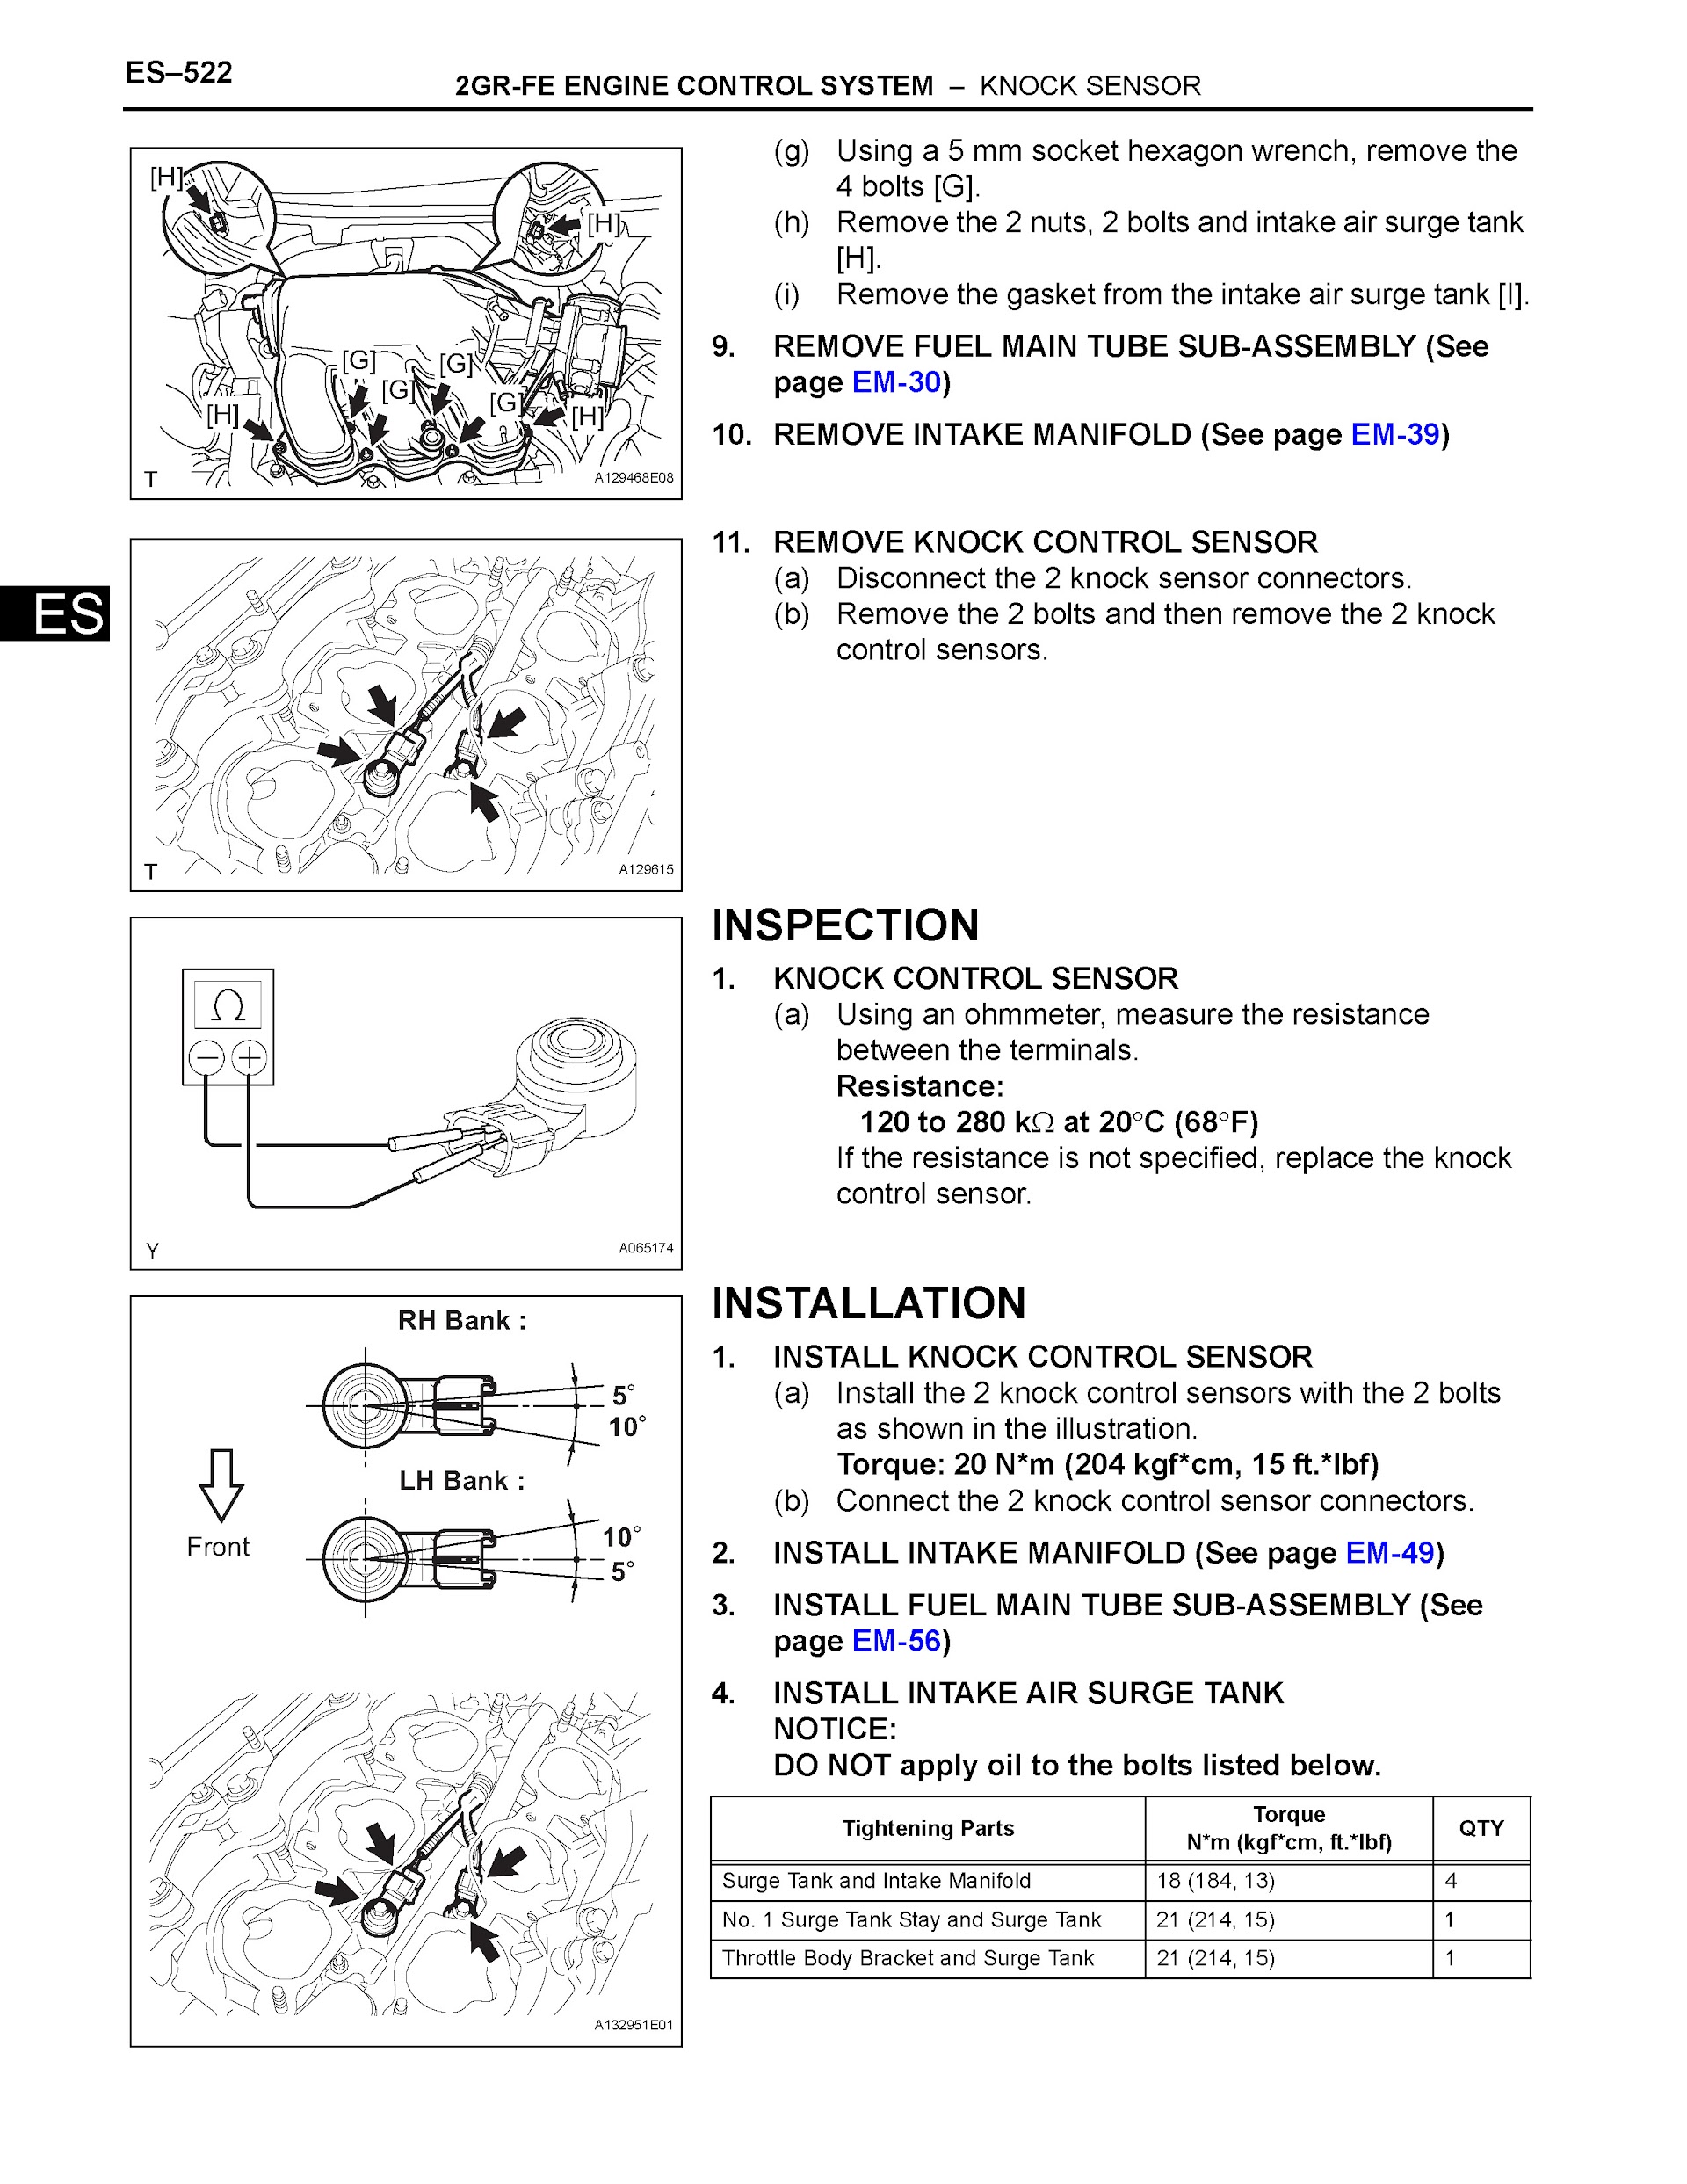 2007 Toyota Sienna Repair Manual, 2GR-Fe Engine Control System